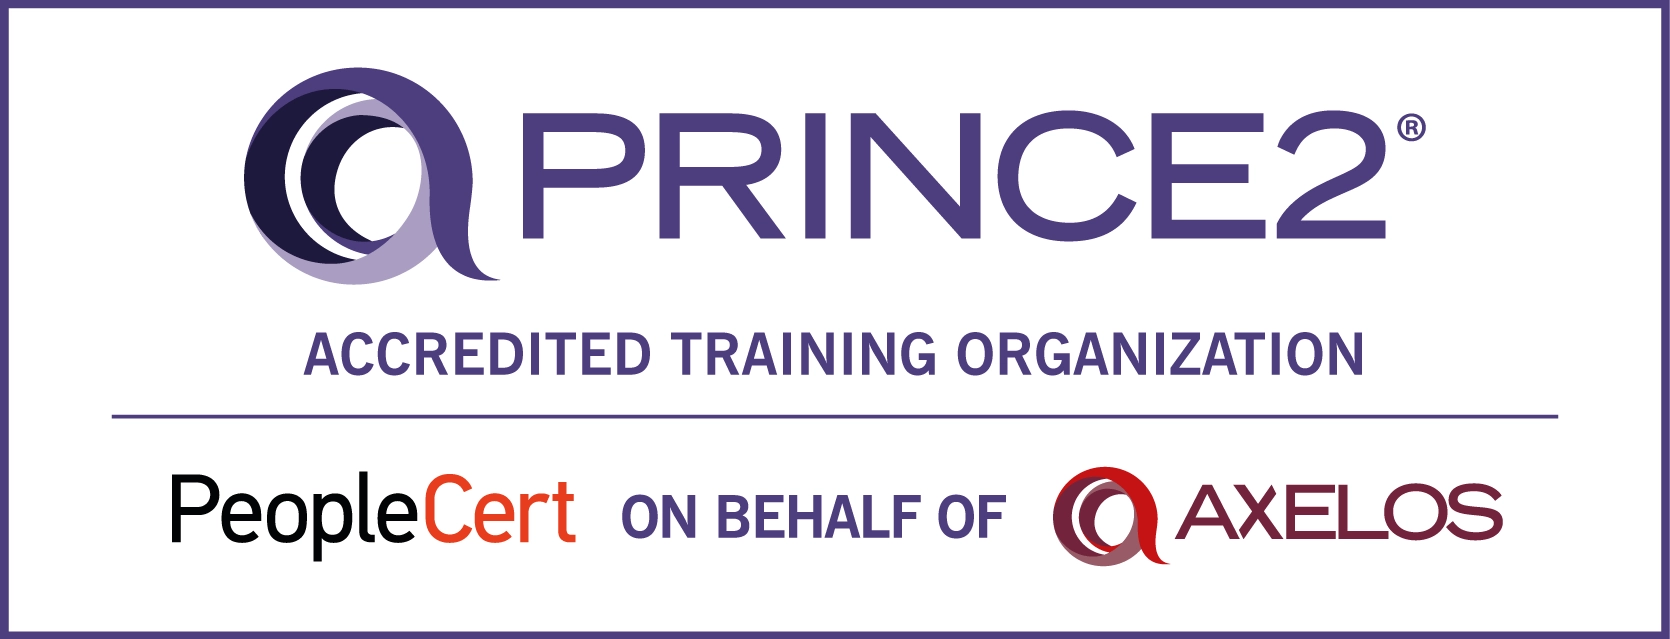 PRINCE2 Accredited Logo